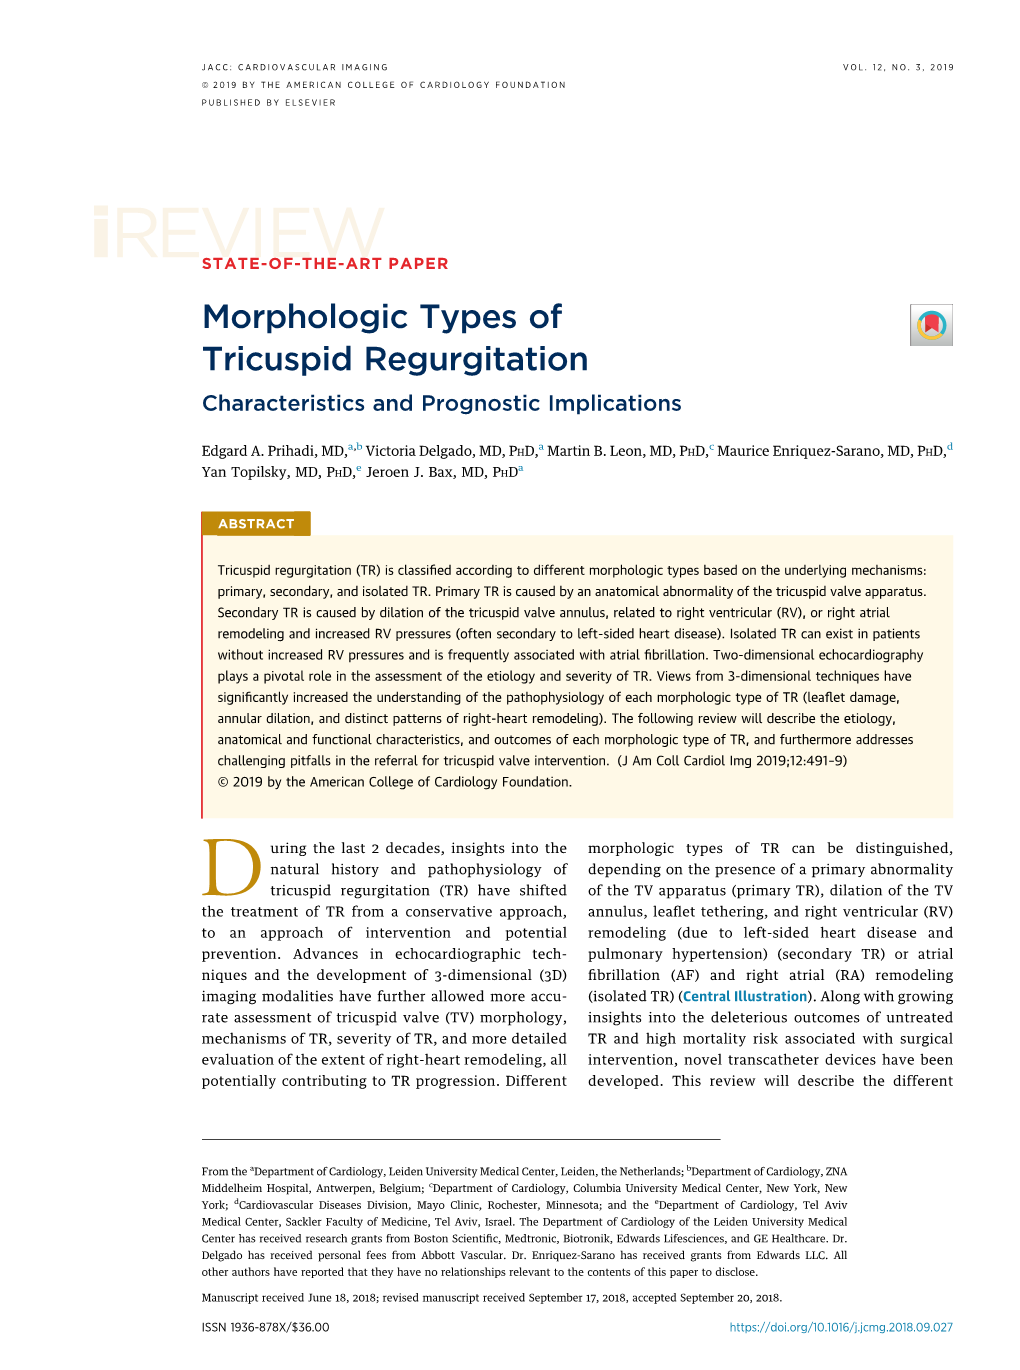 Morphologic Types of Tricuspid Regurgitation Characteristics and Prognostic Implications